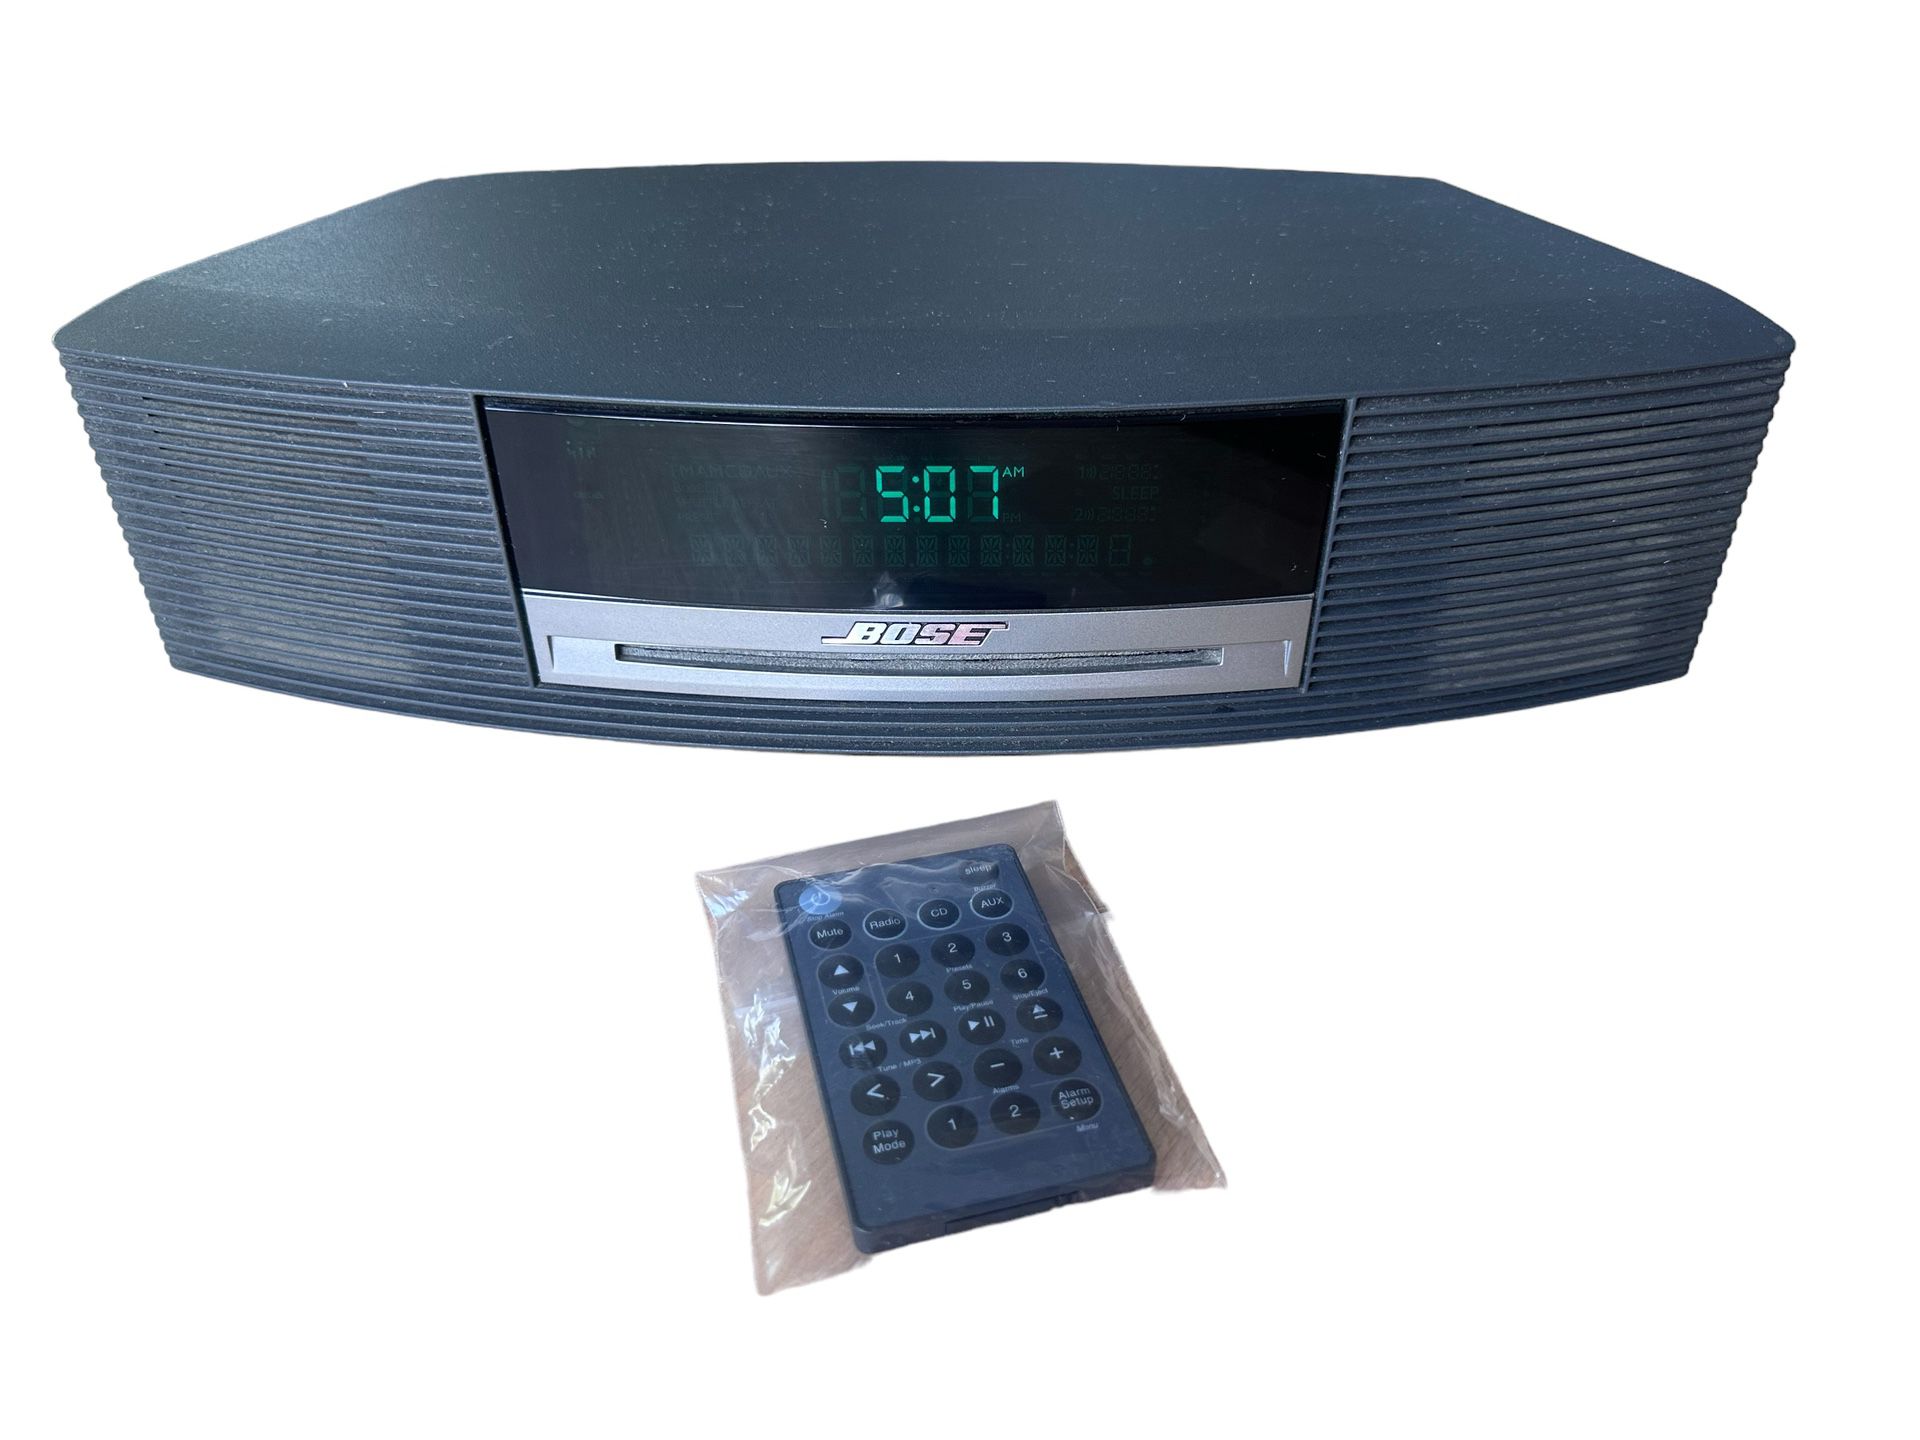 BOSE Wave Music System AM FM Radio Stereo Speaker Sound System w/ Remote CD AWRCC1 Black